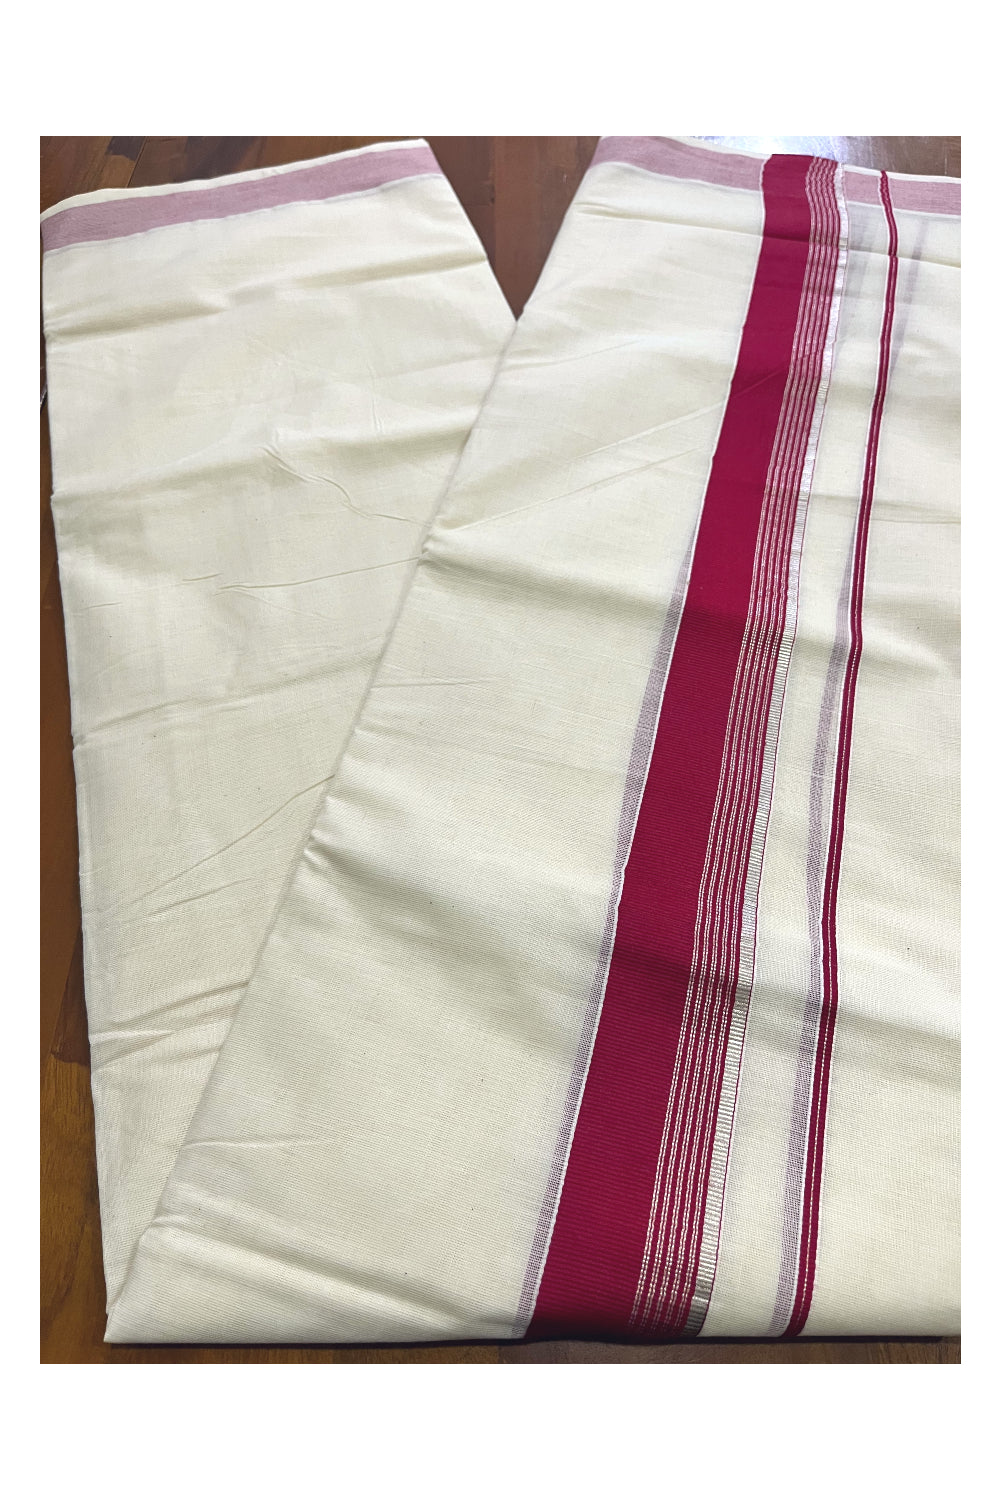 Off White Kerala Cotton Double Mundu with Silver Kasavu and Maroon Border (South Indian Kerala Dhoti)